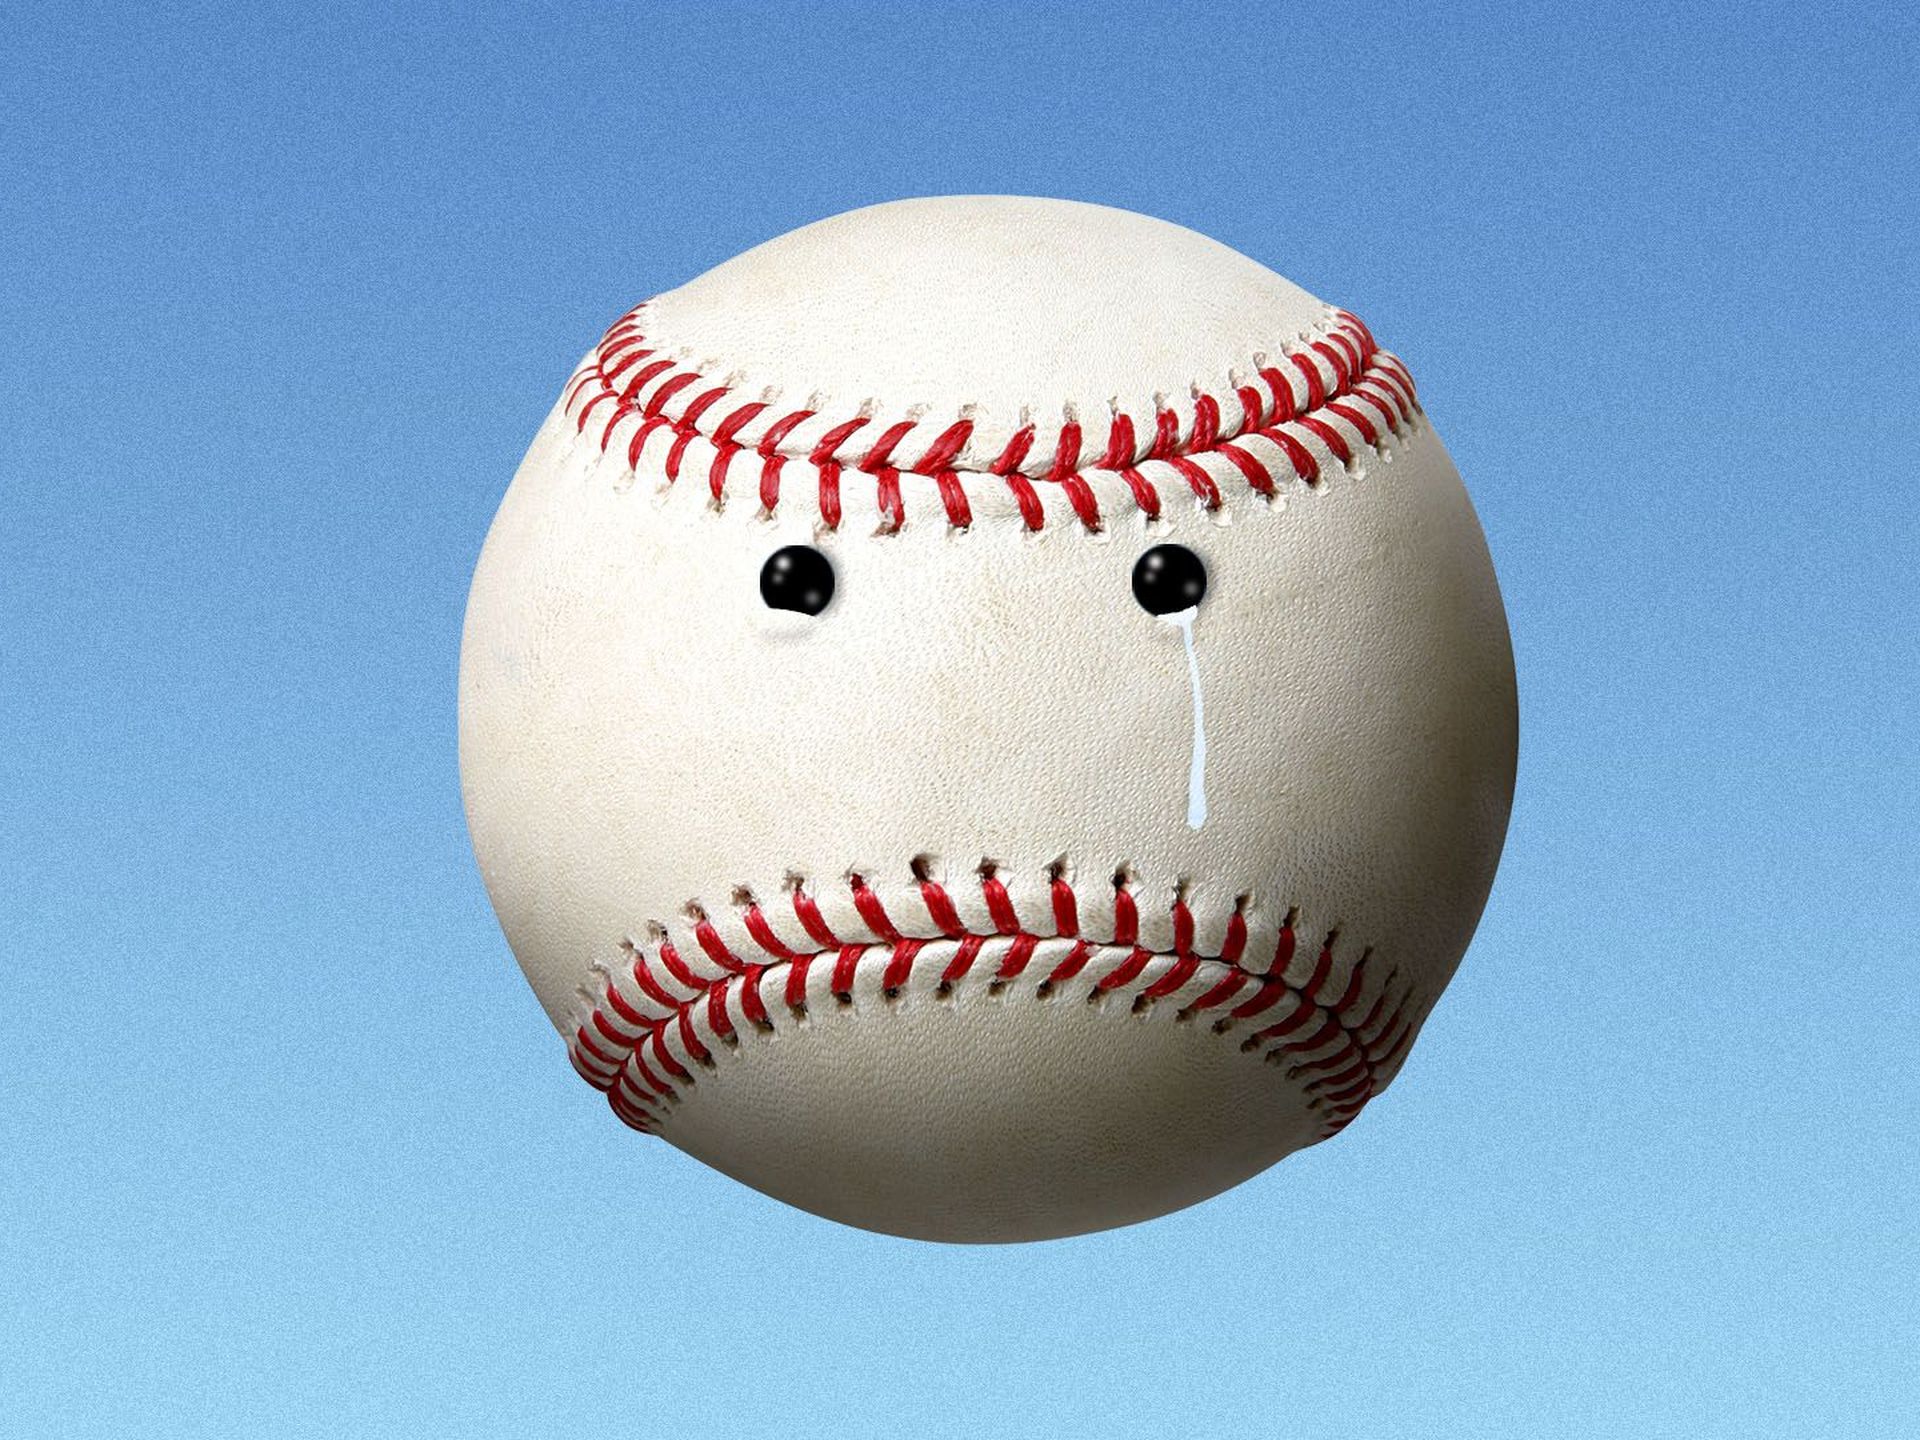 MLB announces modernization of Minor League system - World